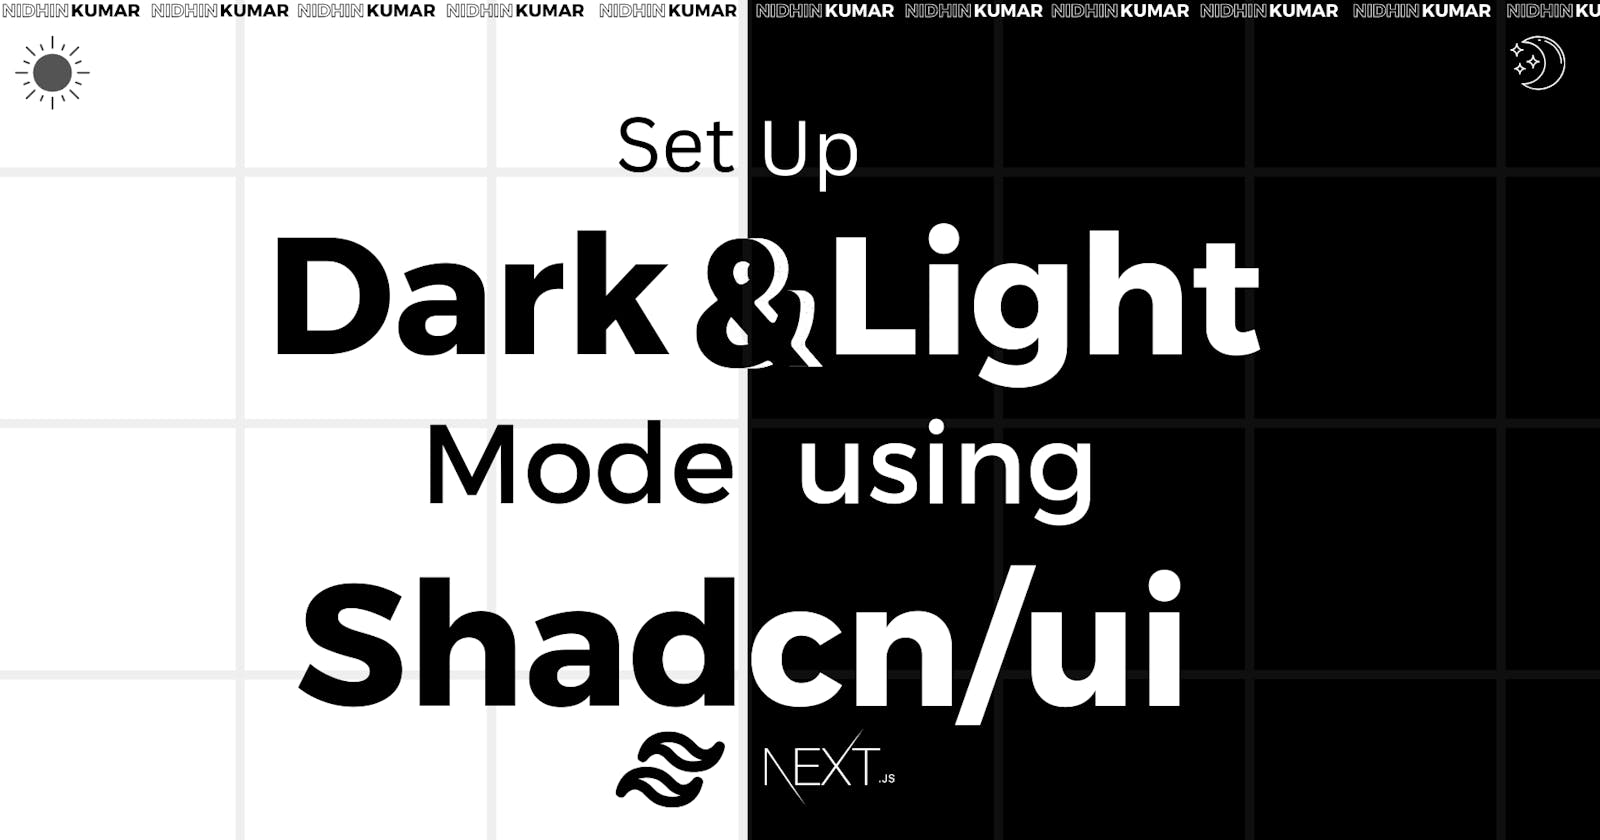 Setup Dark & Light Mode for your Next.js application using Shadcn